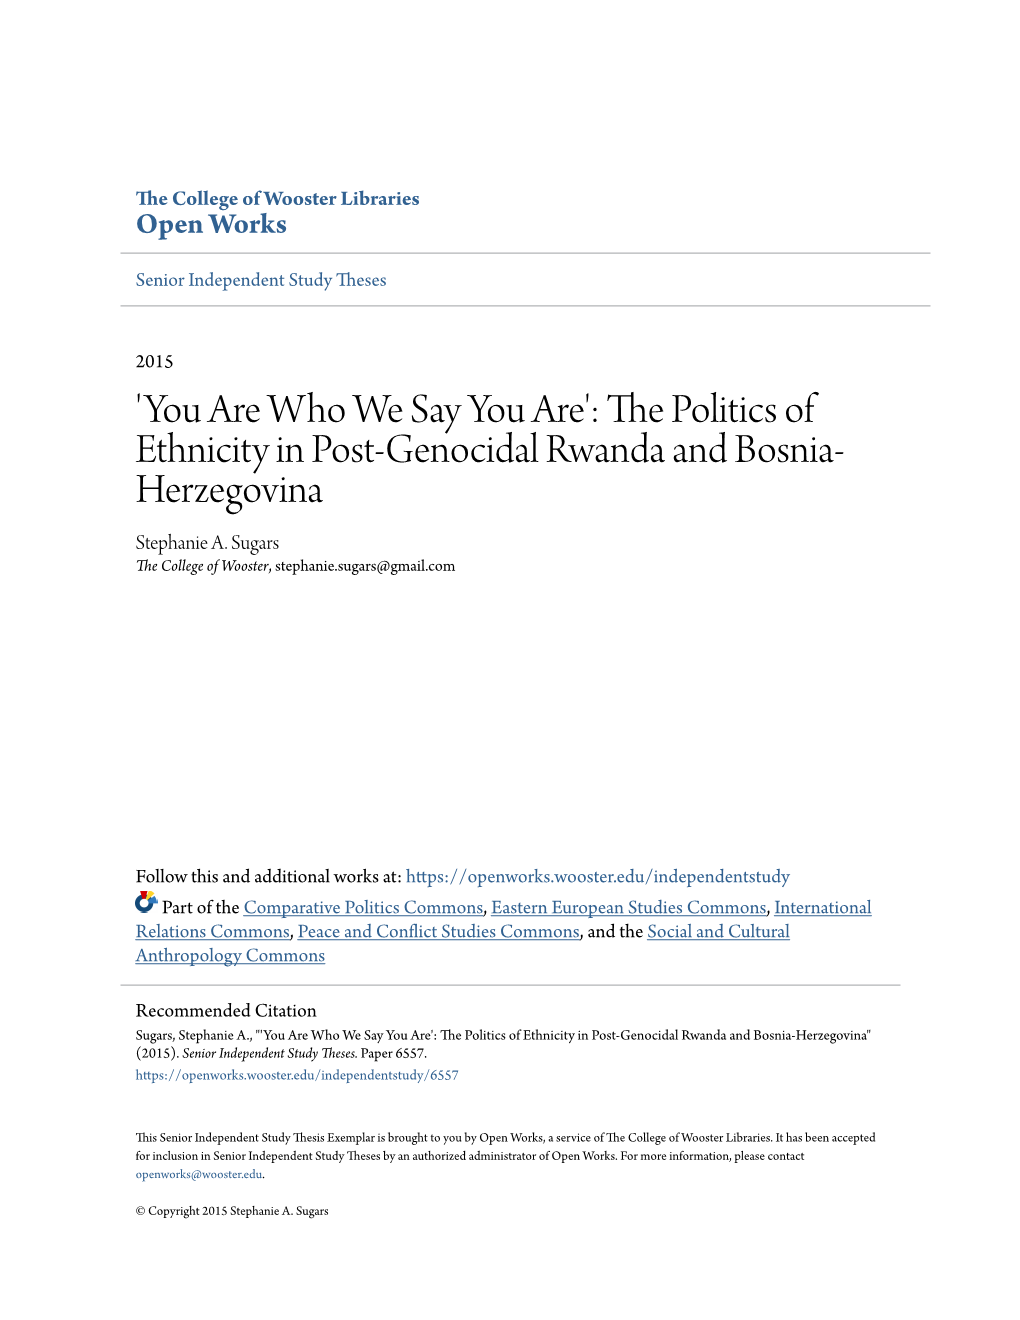 The Politics of Ethnicity in Post-Genocidal Rwanda and Bosnia-Herzegovina